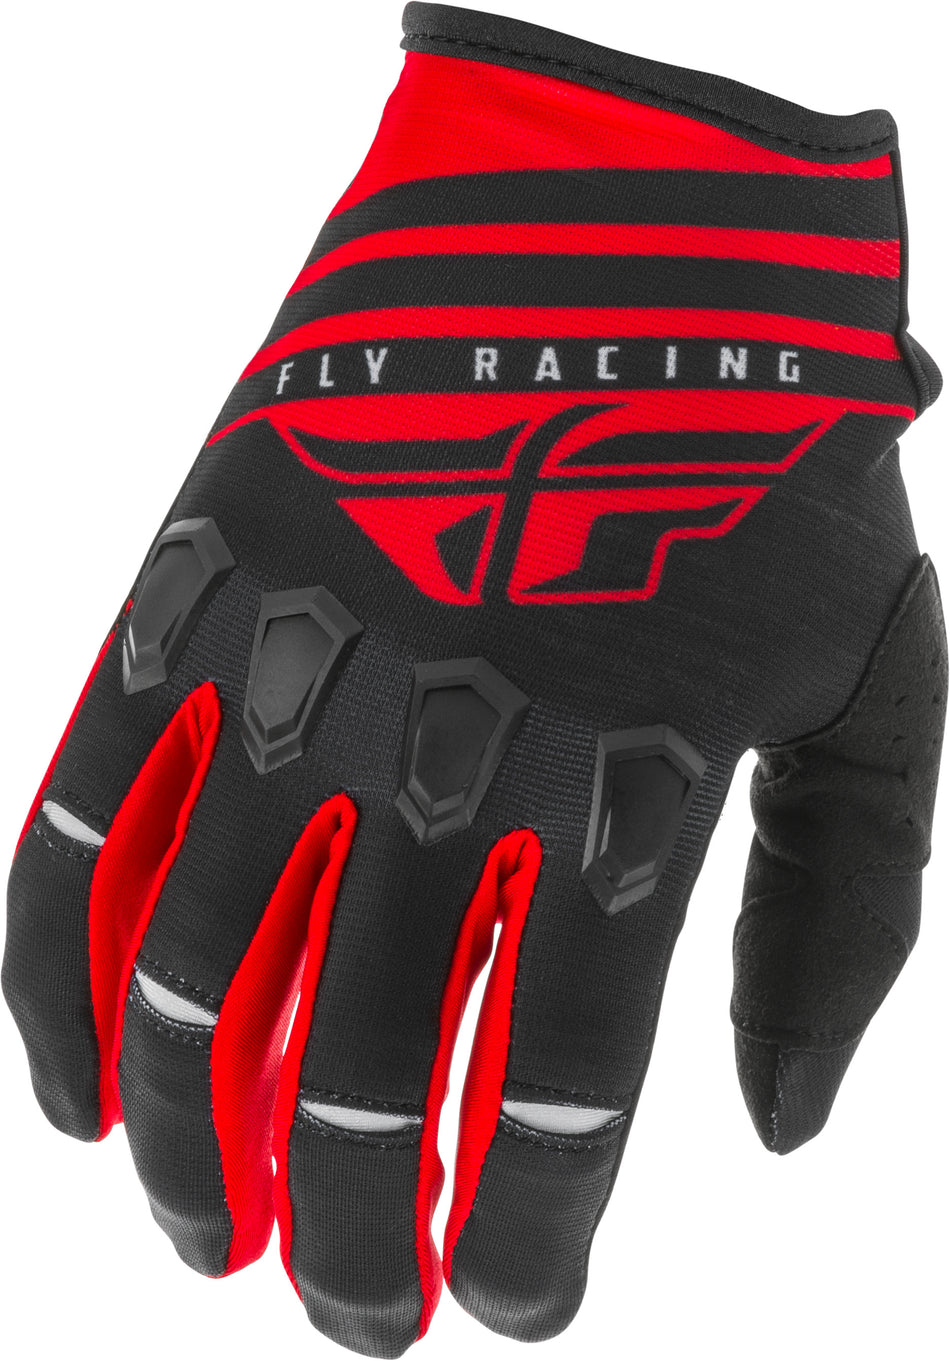 FLY RACING Kinetic K220 Gloves Red/Black/White Sz 07 373-51307